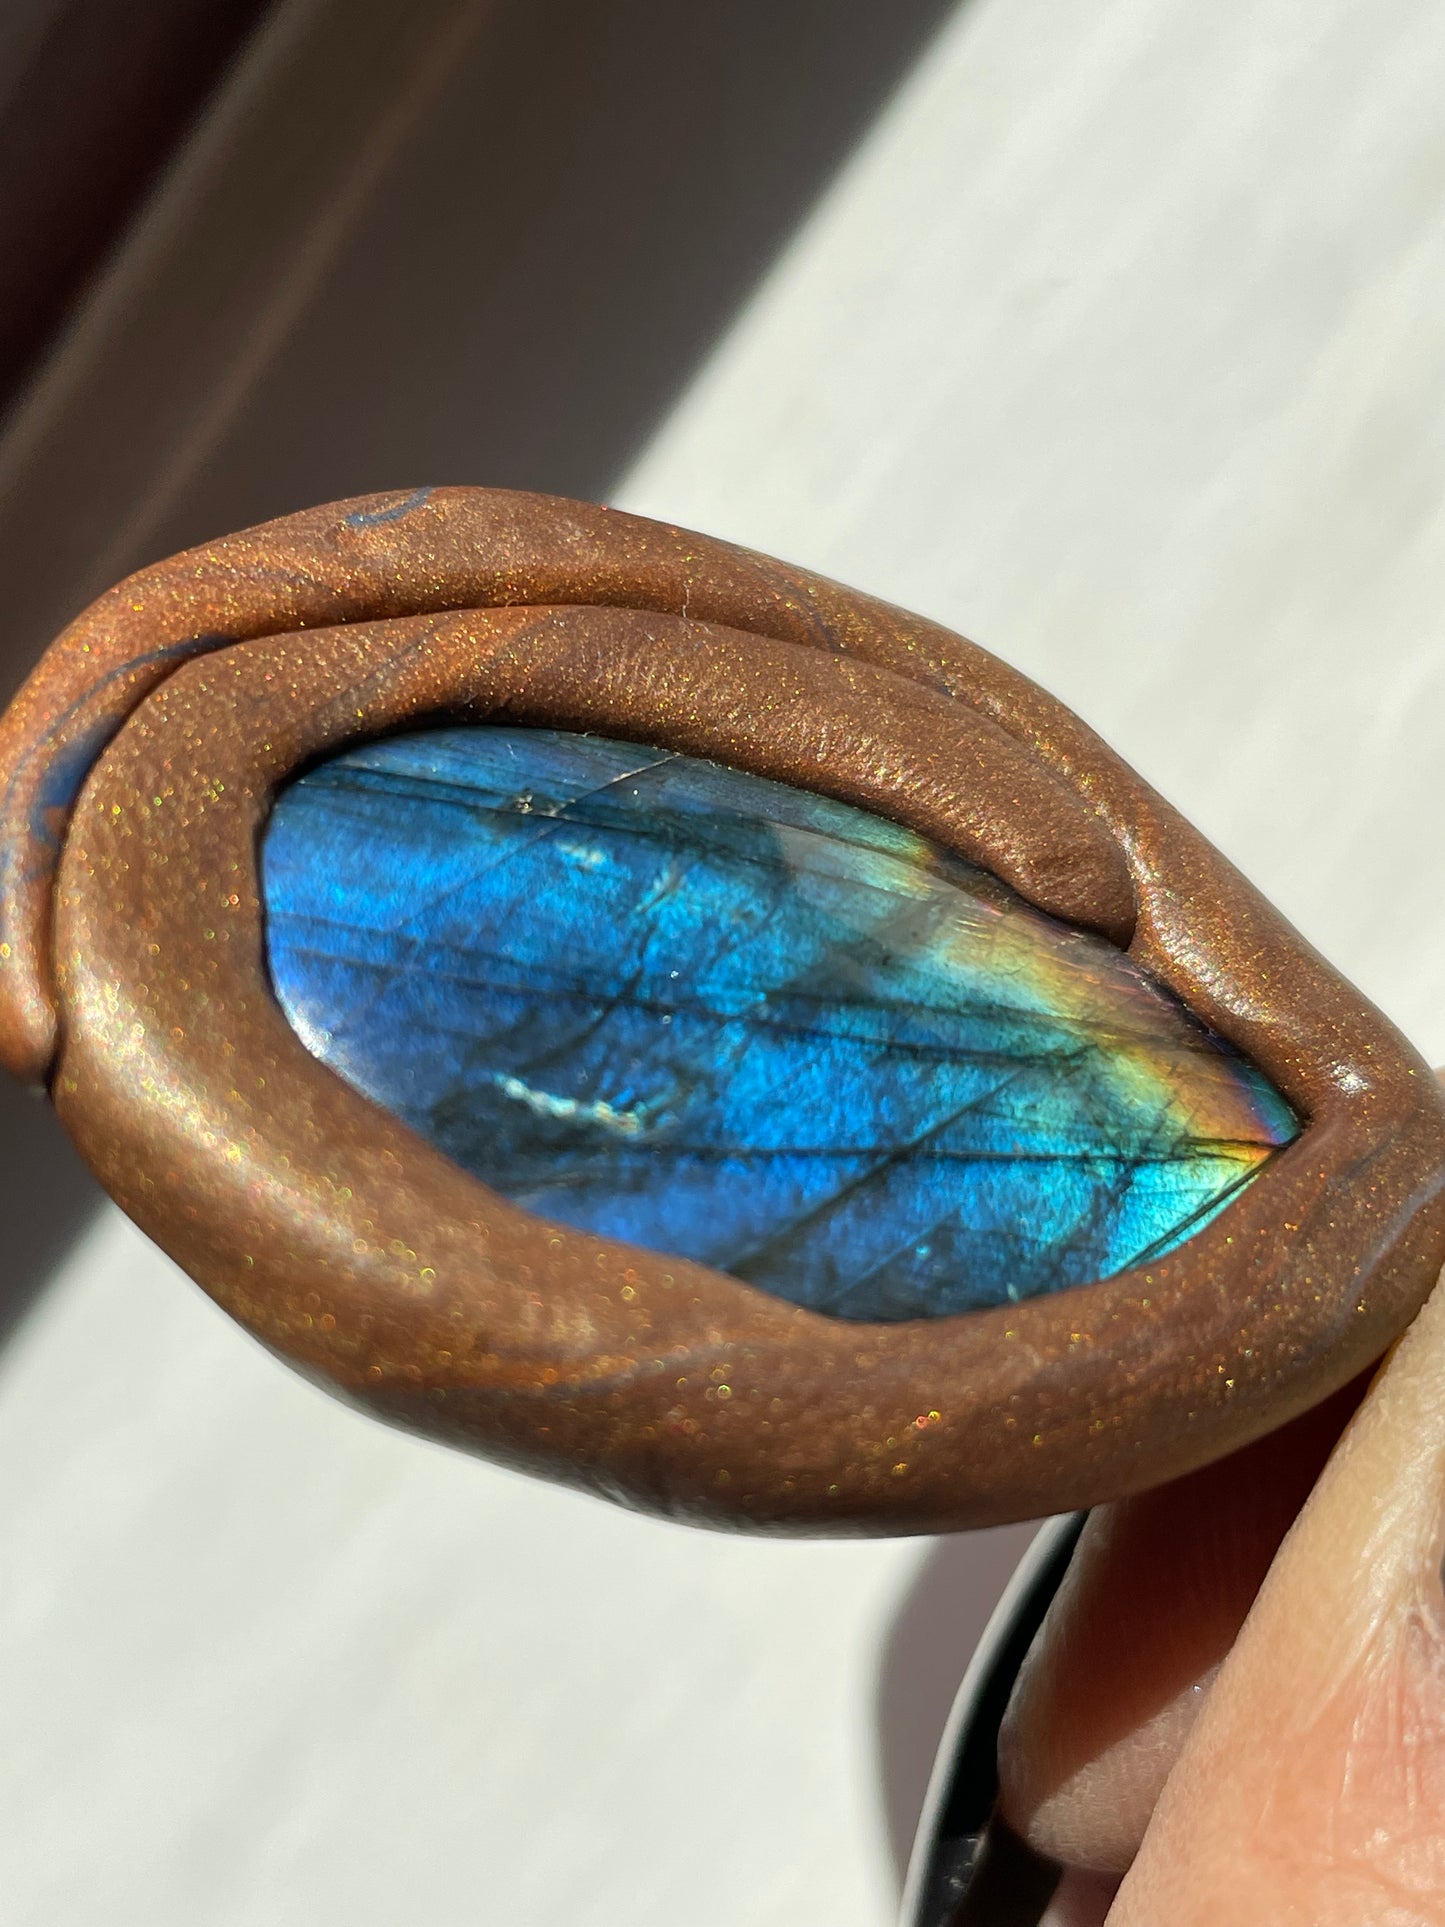 Blue Labradorite Crystal Gemstone Gold Clay Pendant Necklace